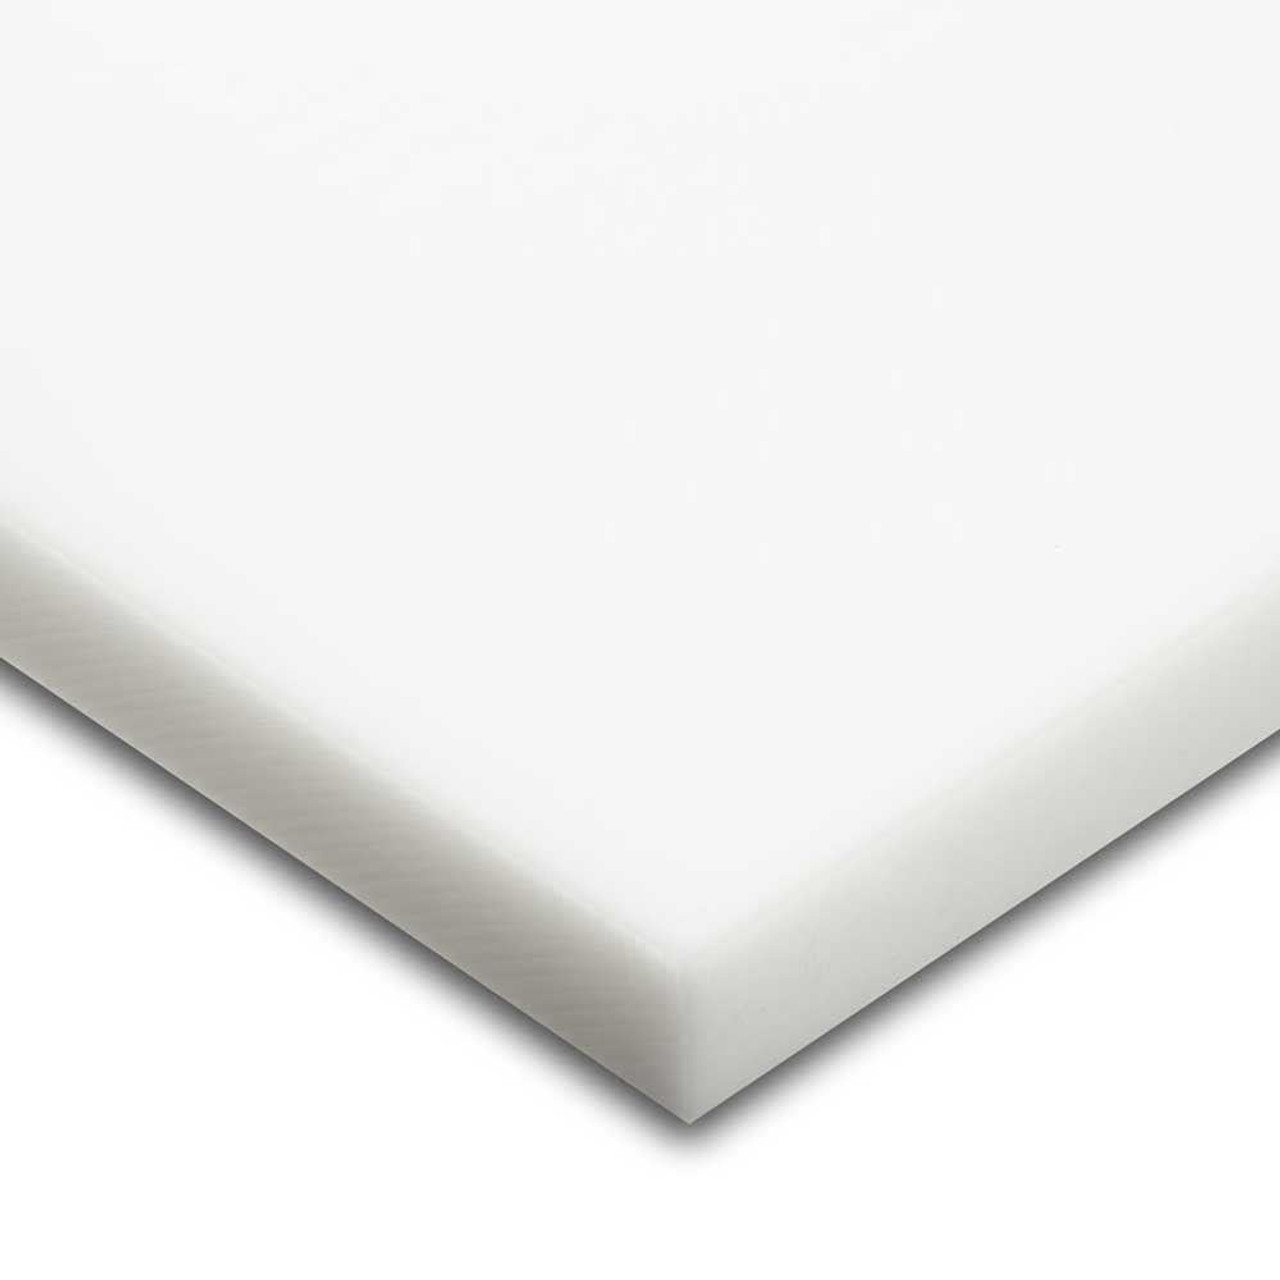 2" x 4" x 24", Acetal Plastic Sheet, White